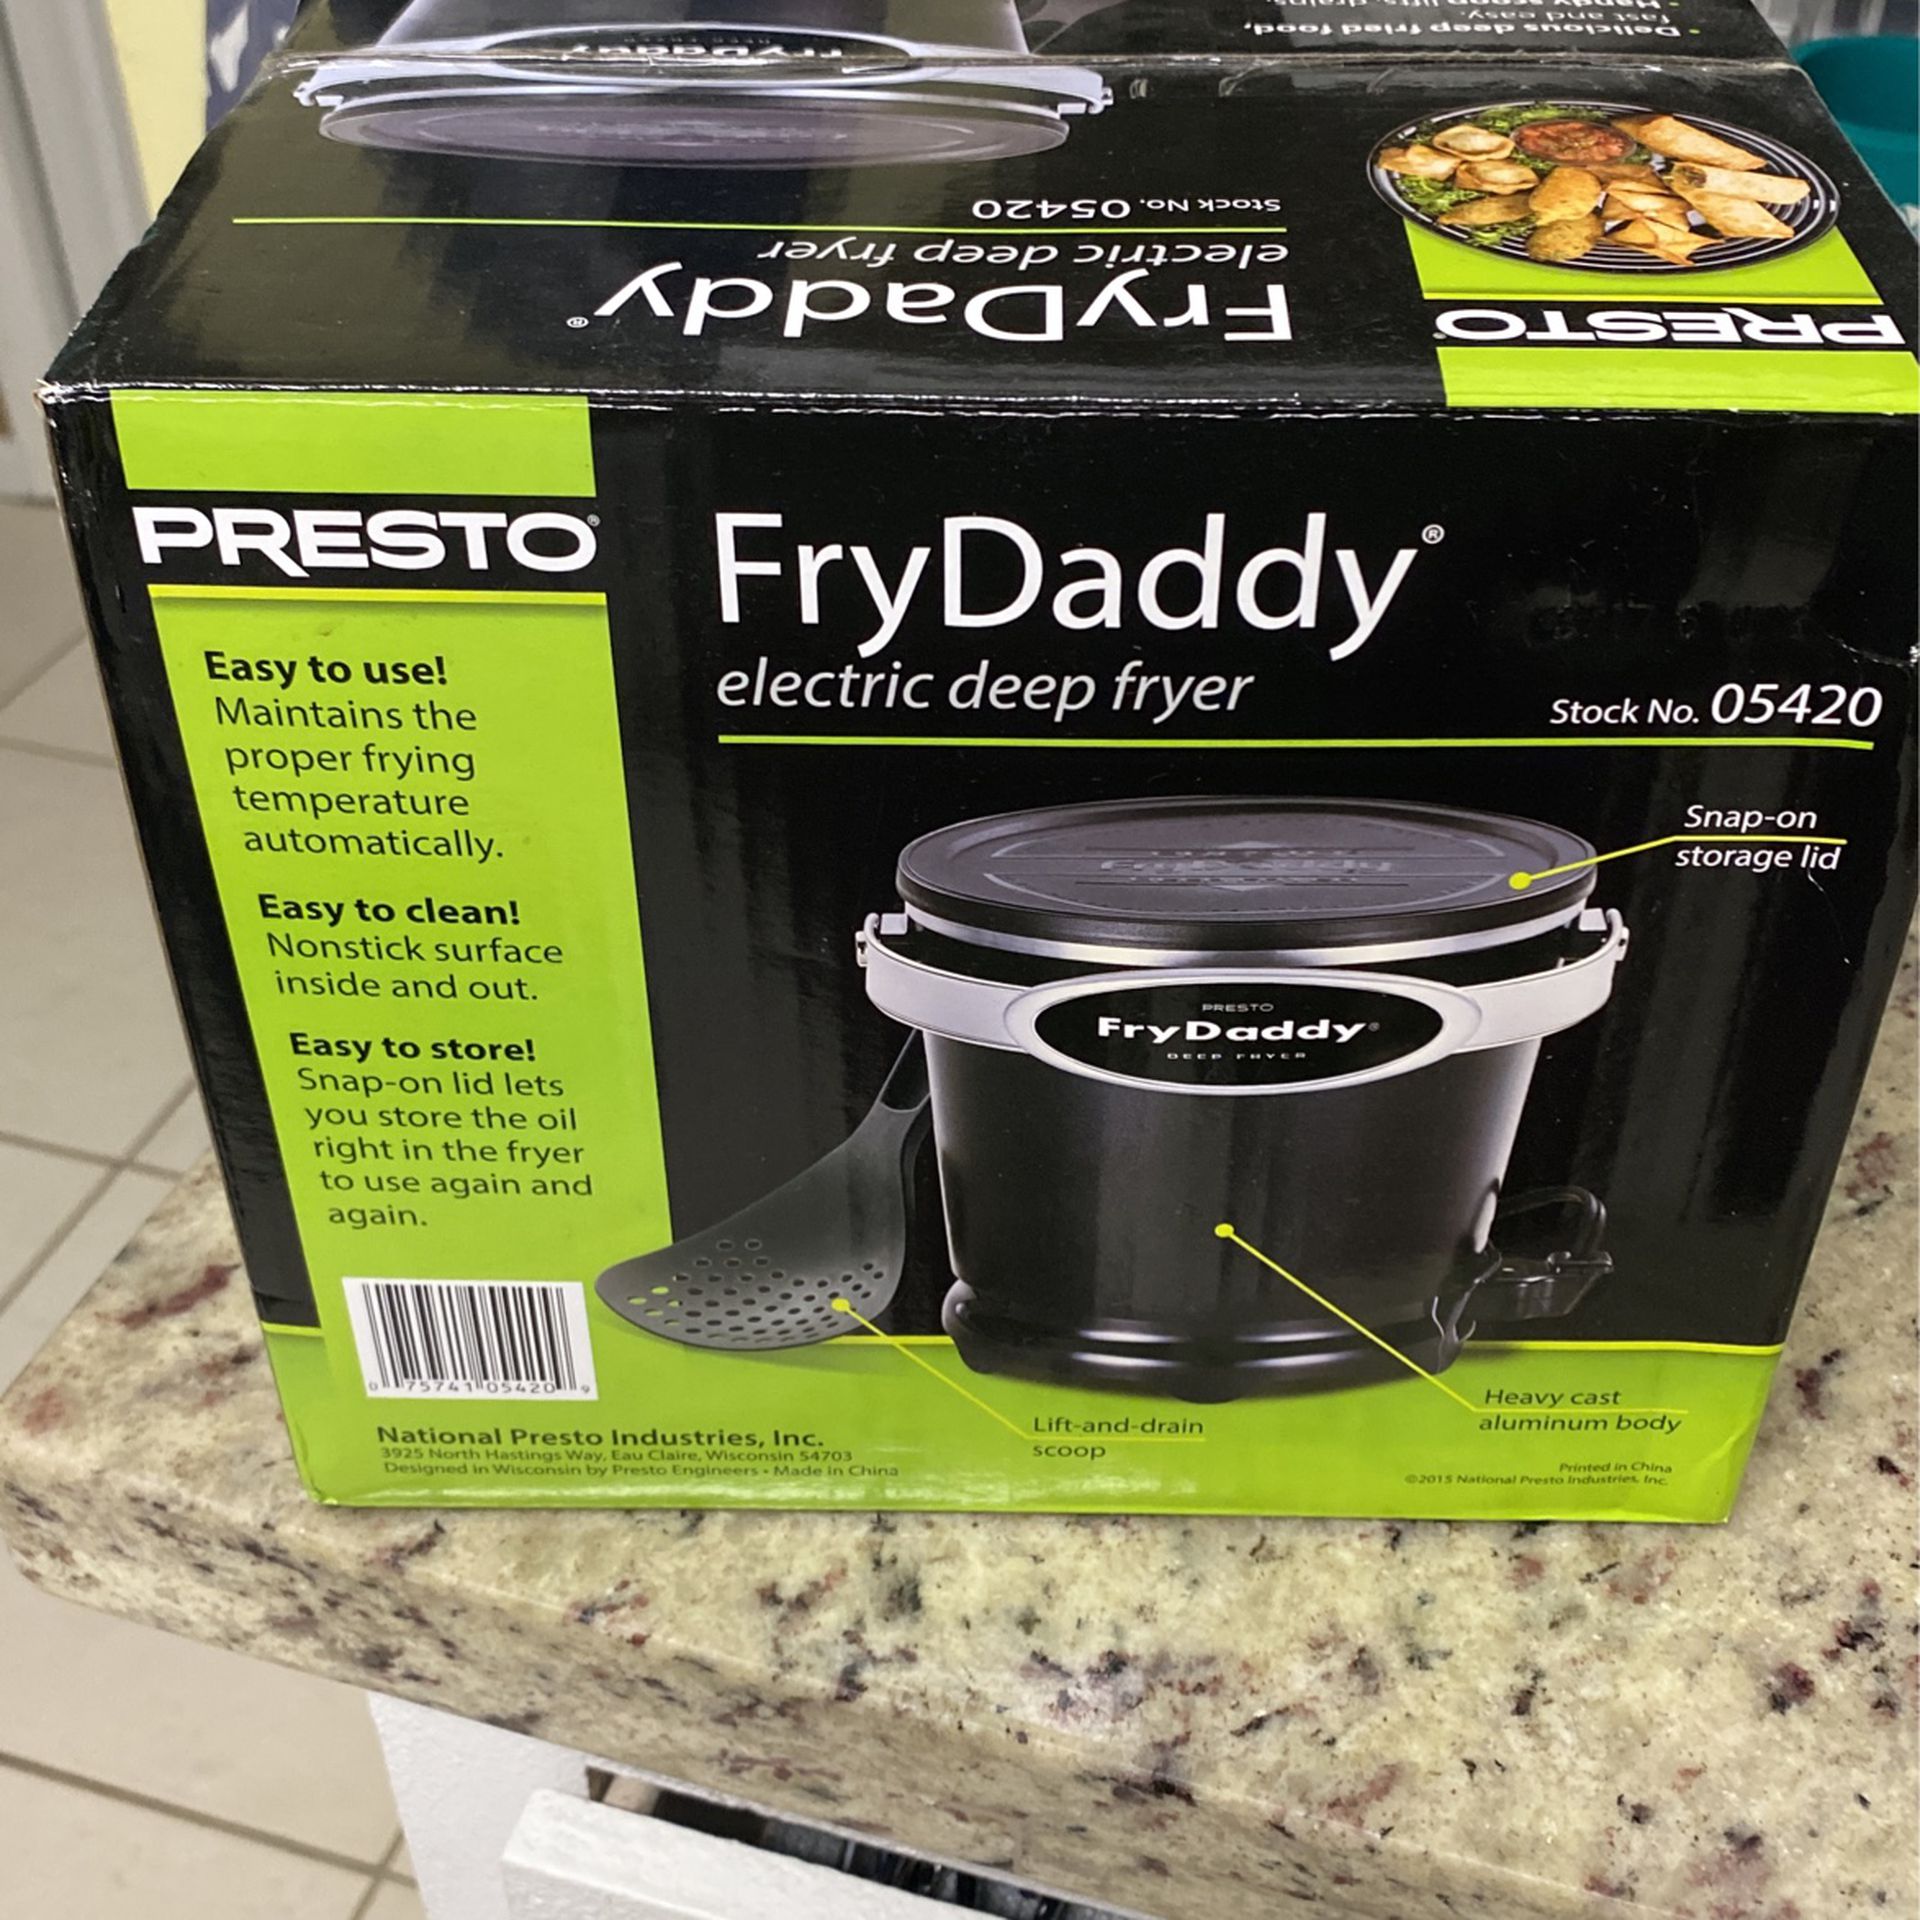 PRESTO FRY DADDY - appliances - by owner - sale - craigslist